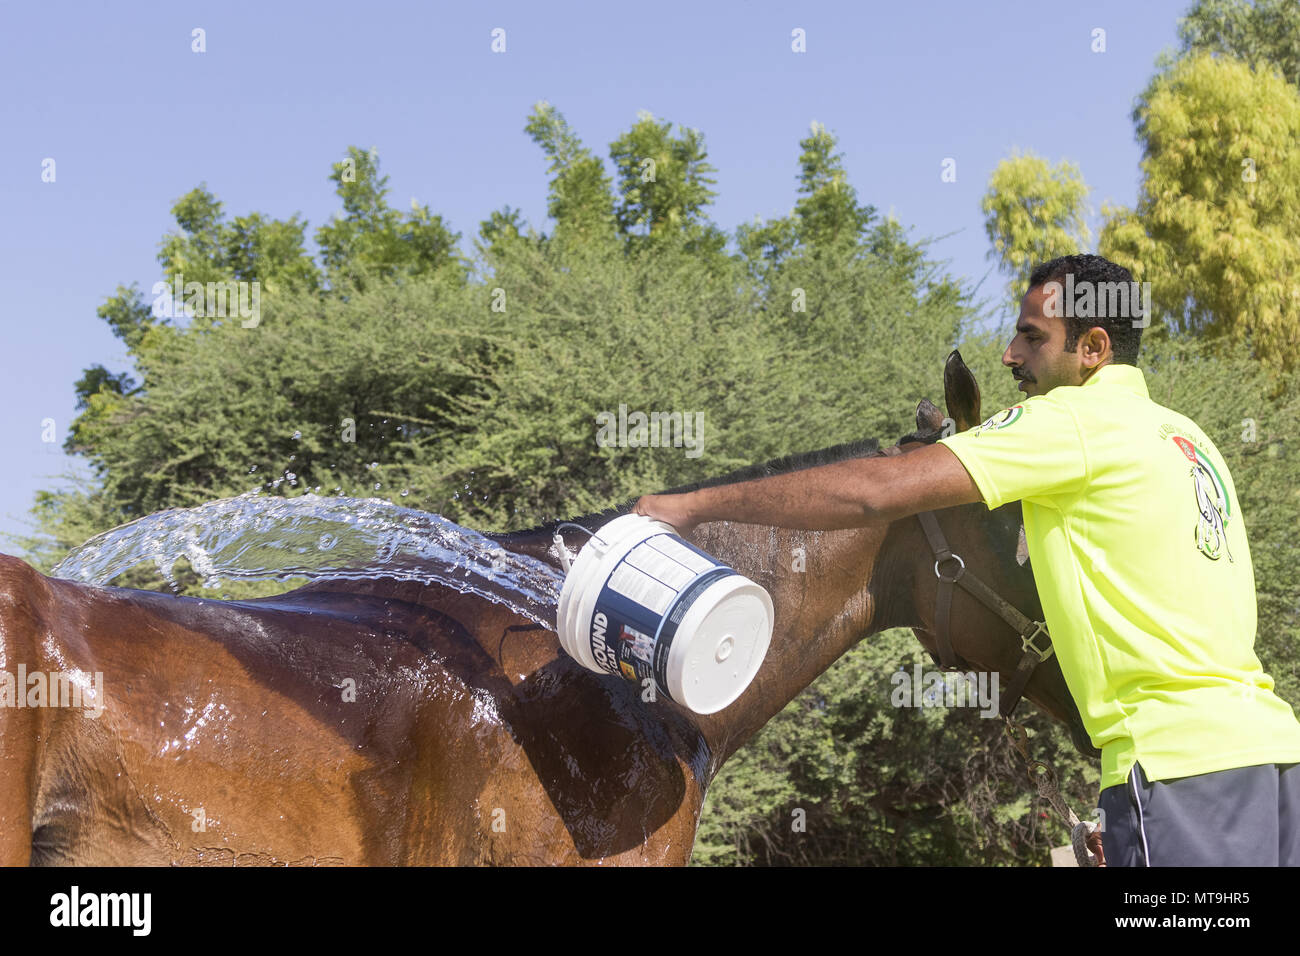 Arabian Horse. Groom cooling down horse after an endurance ride. Abu Dhabi Stock Photo